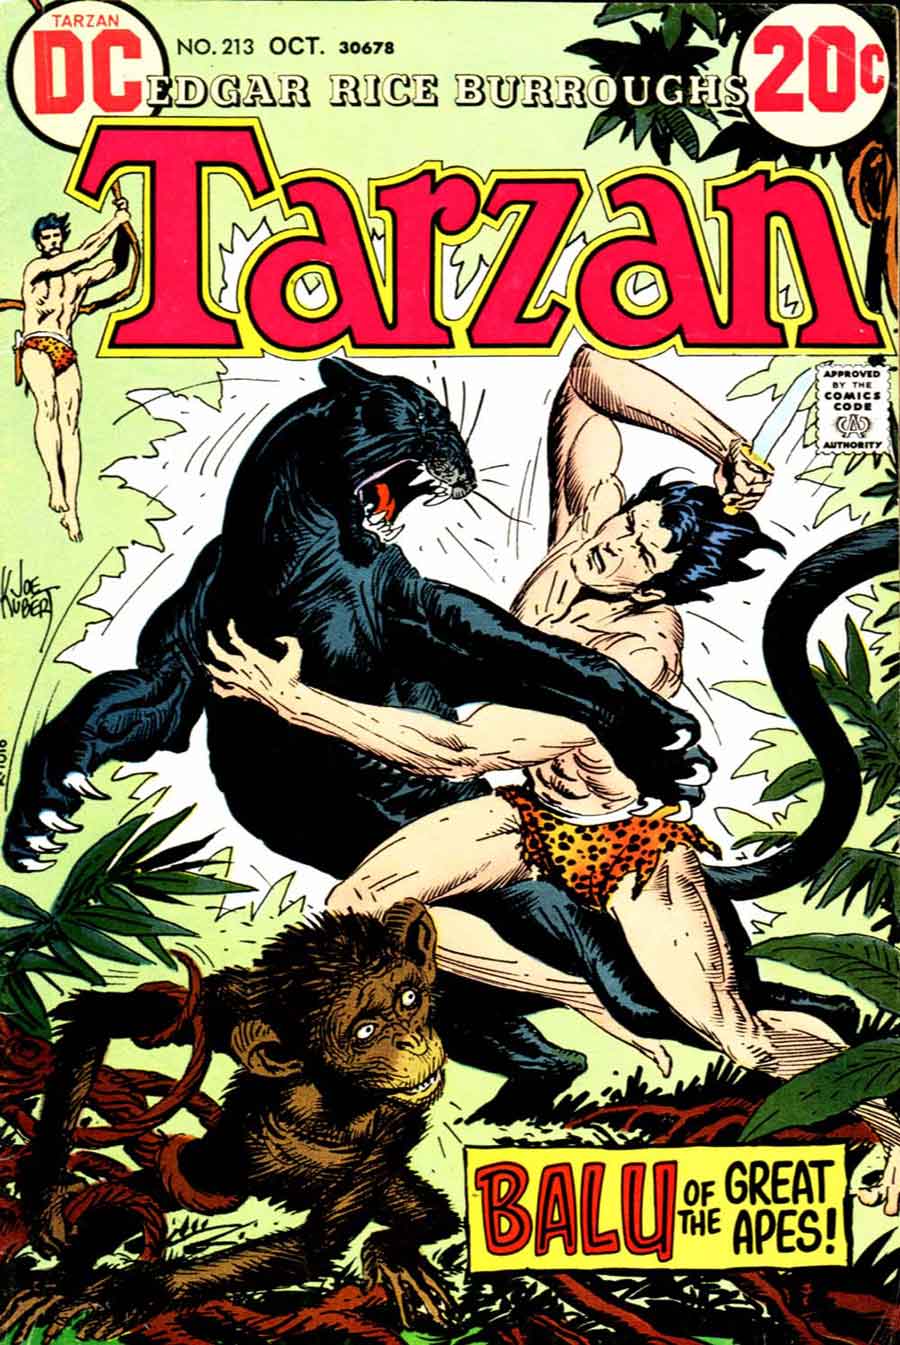 Tarzan v1 #213 dc comic book cover art by Joe Kubert